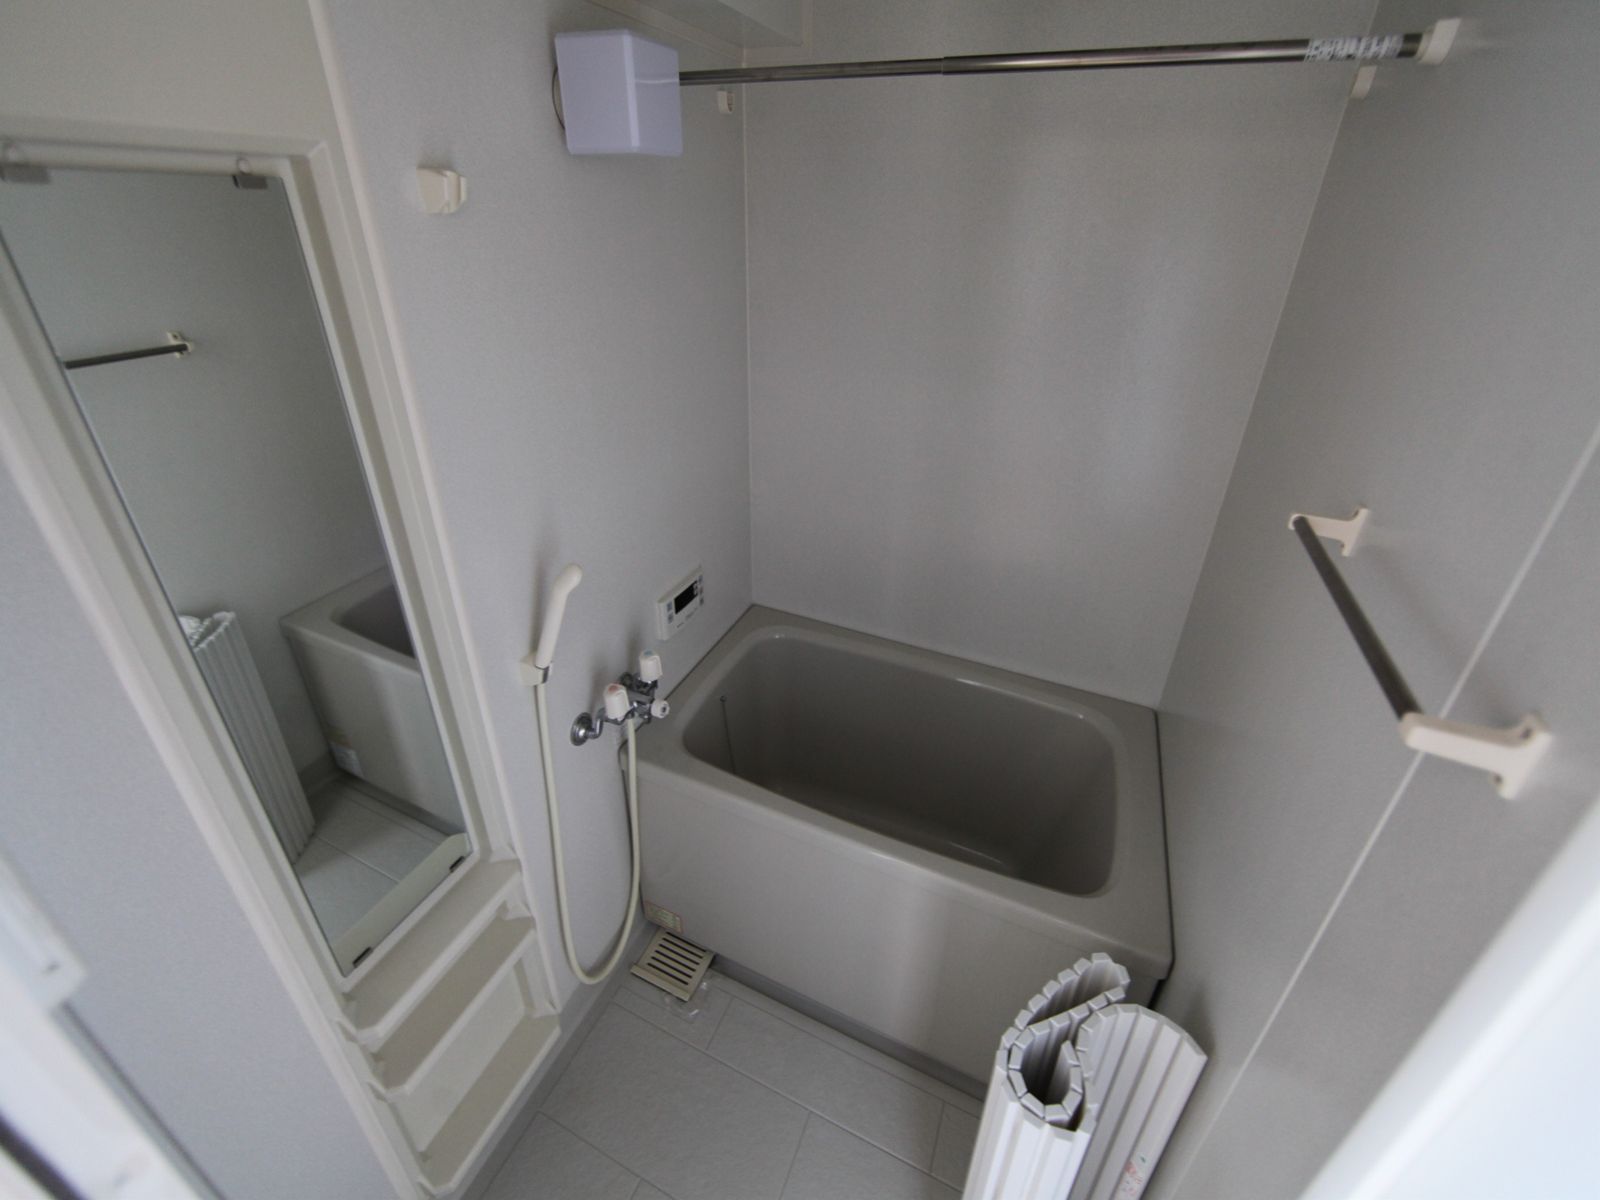 Bath. With reheating Bathroom with heating dryer With mist sauna bath